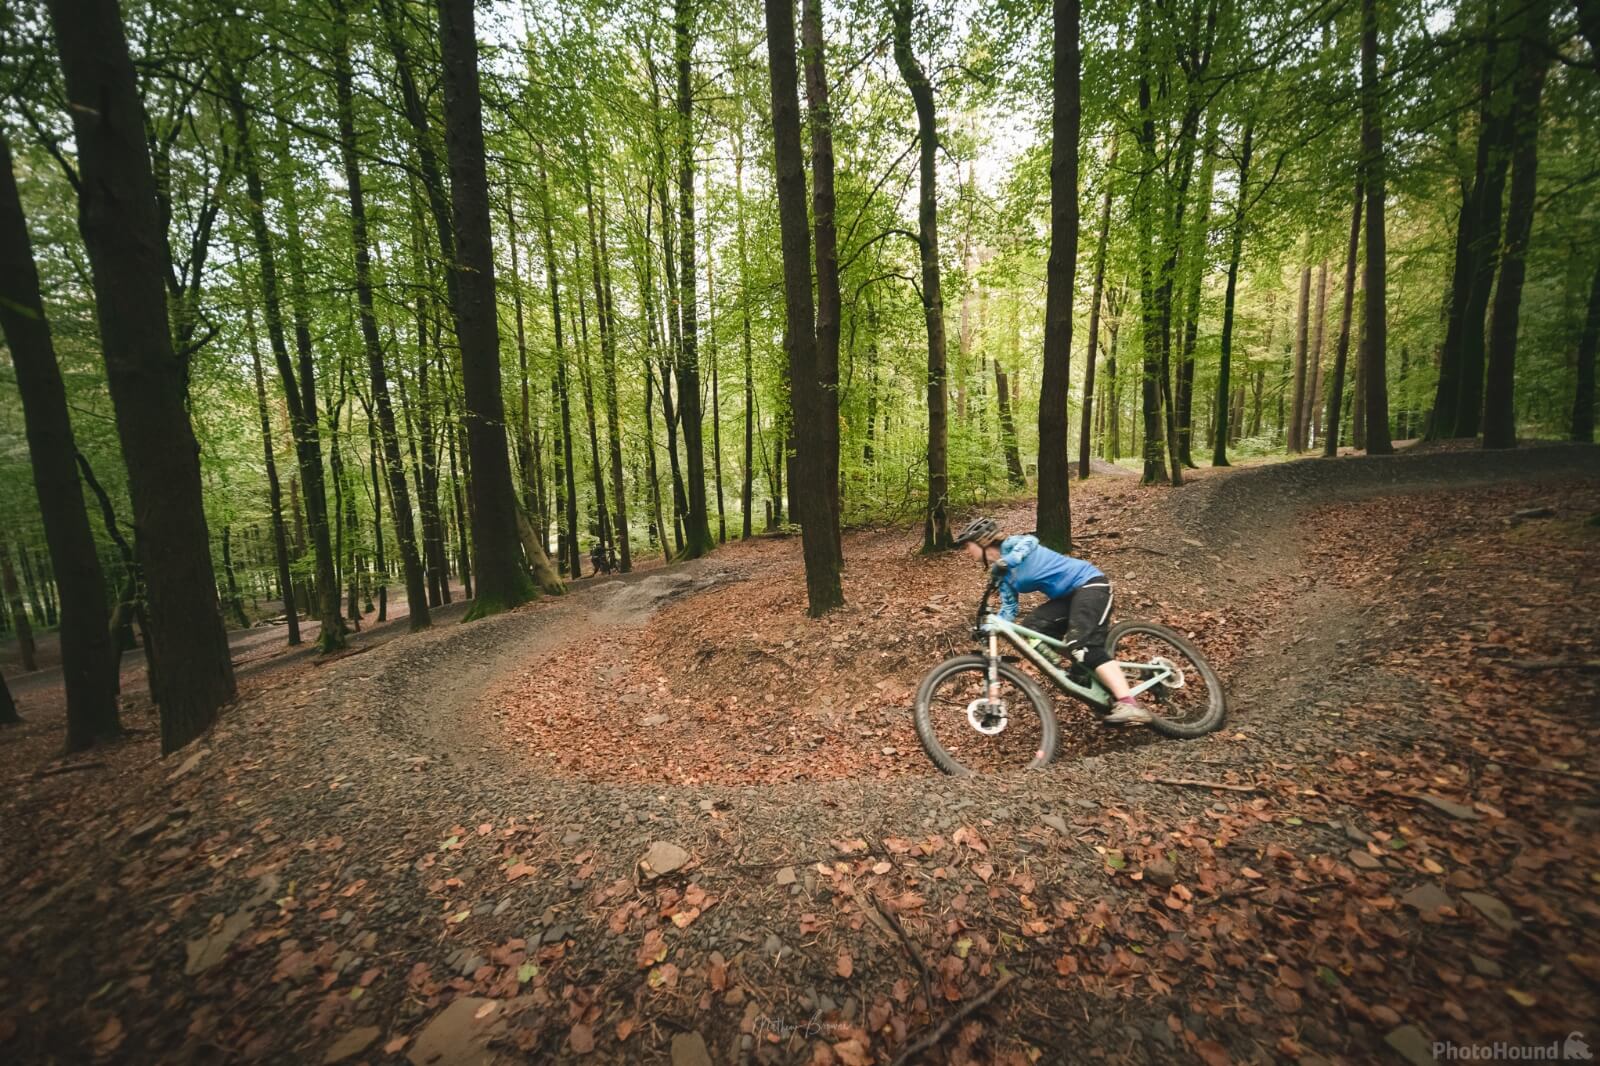 Image of Afan Forest Bike Park (Bryn Bettws Lodge) by Mathew Browne